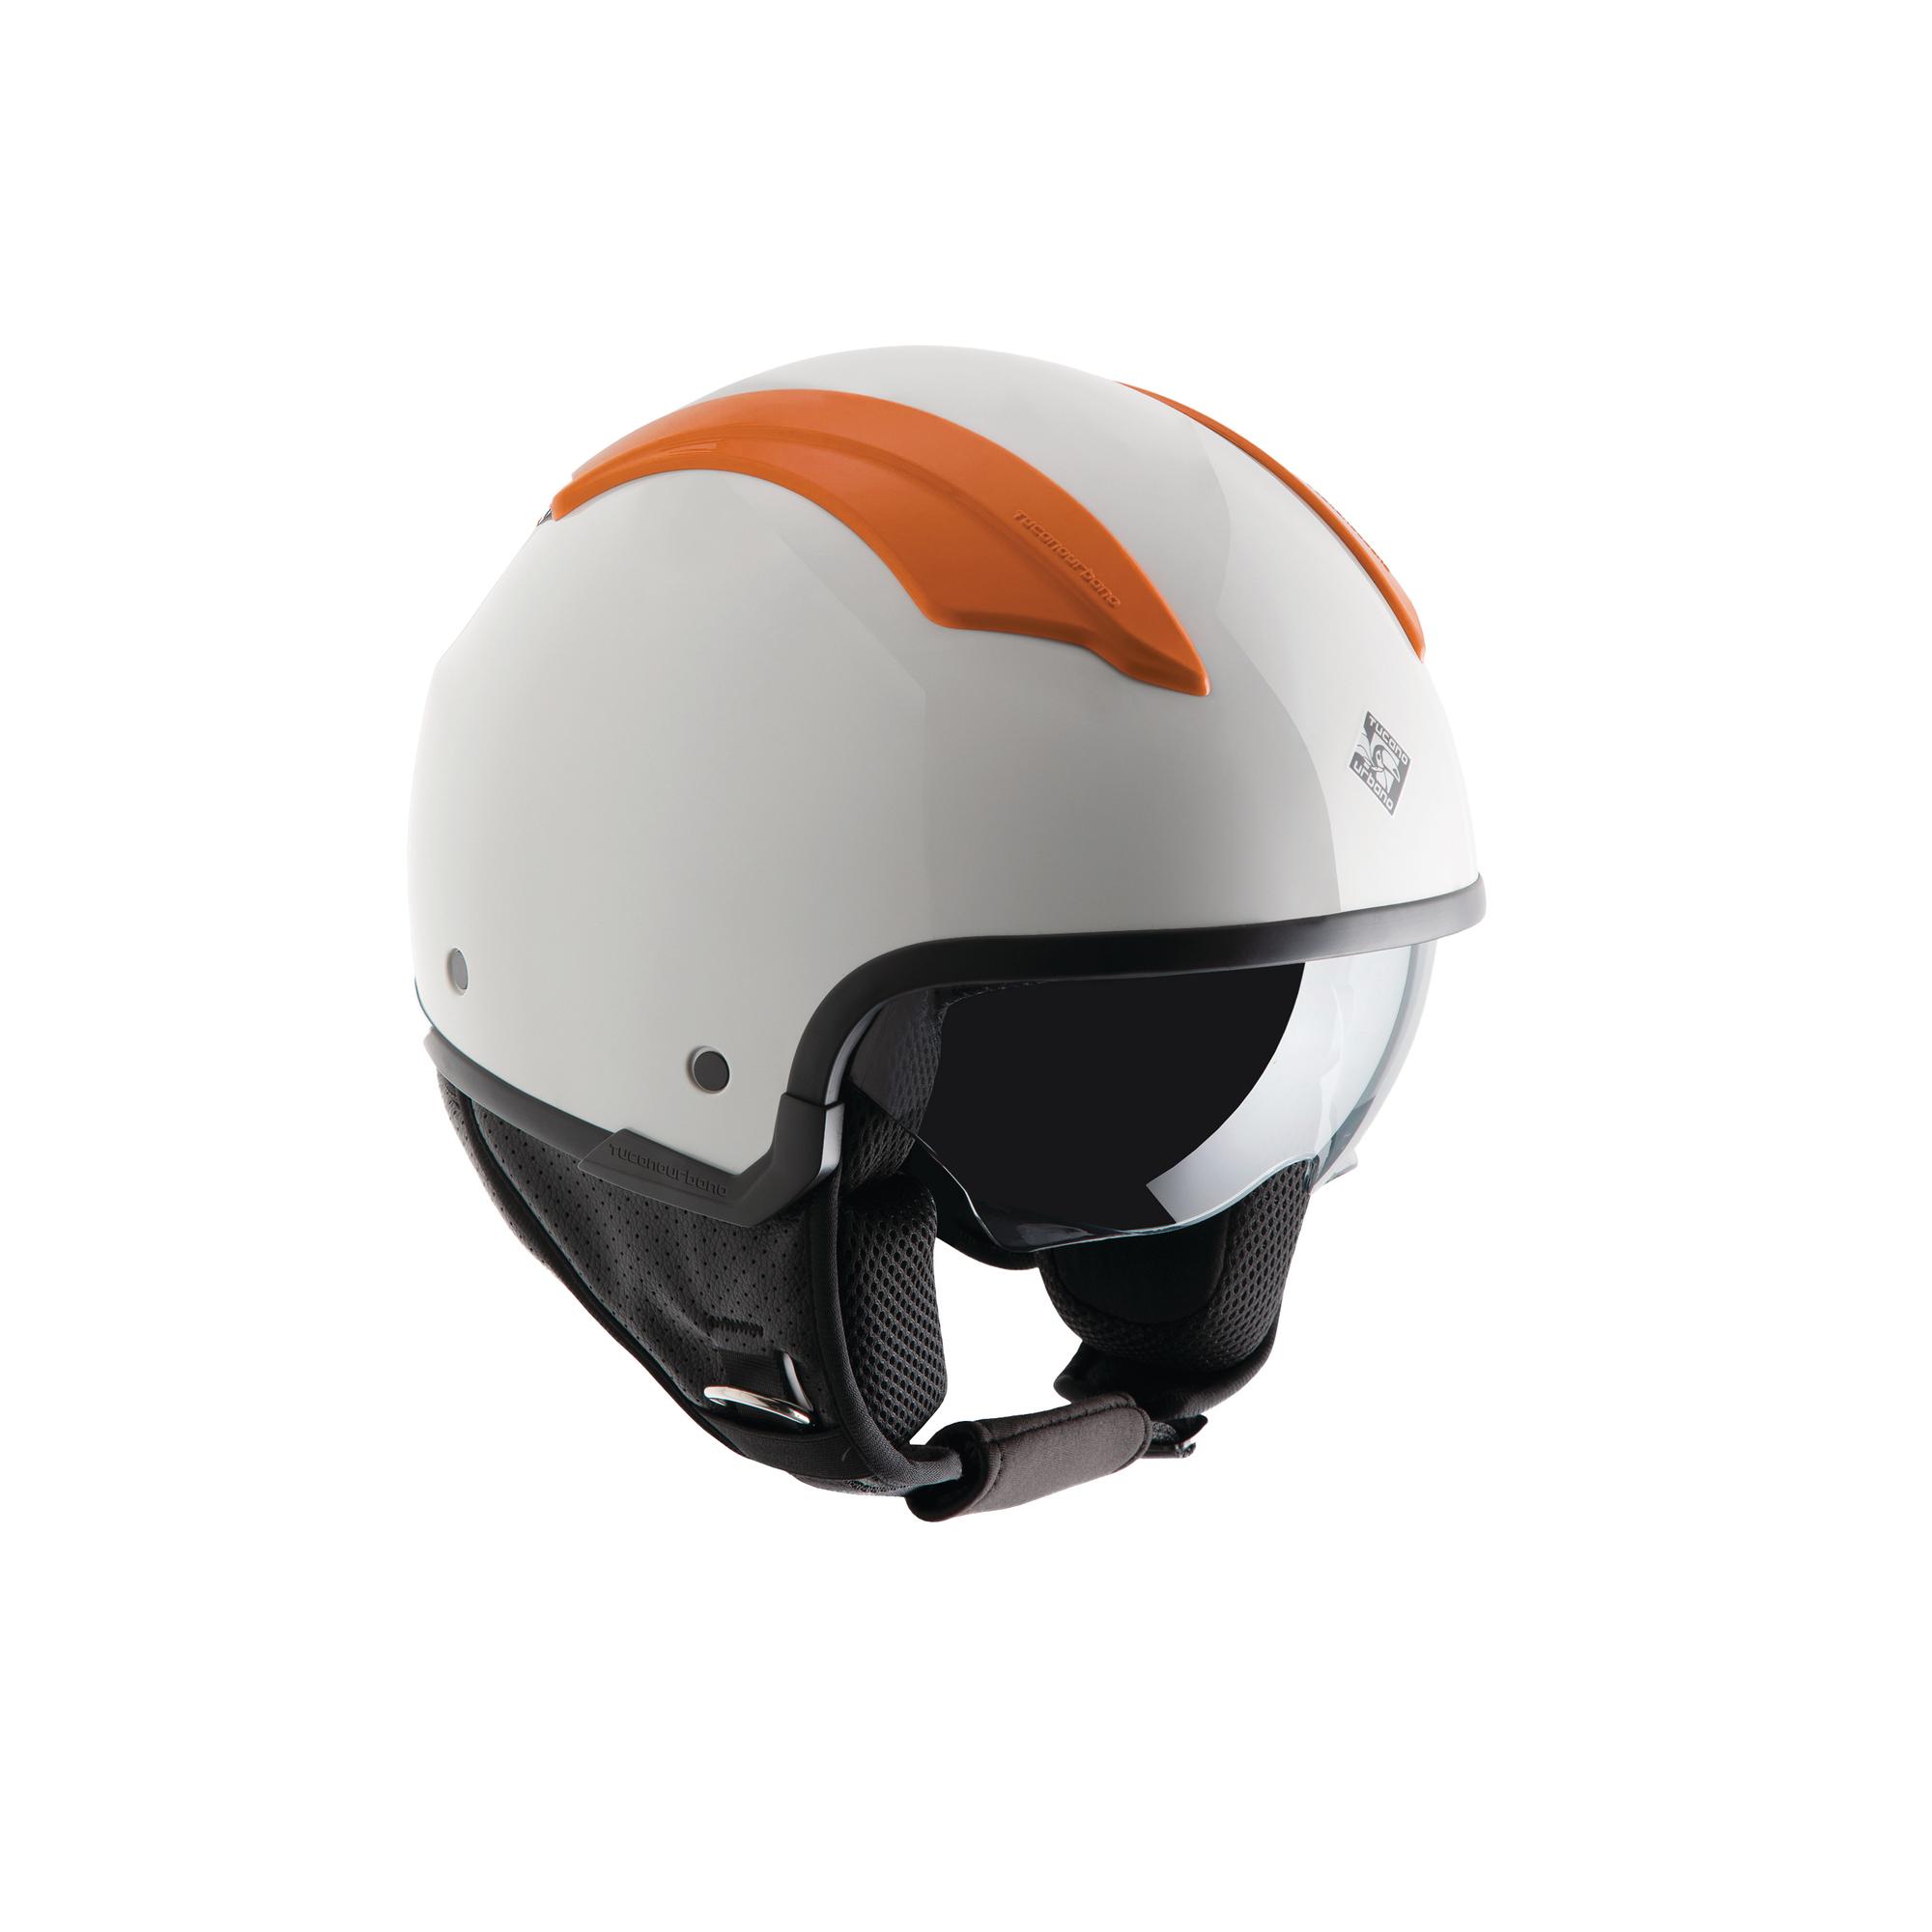 Air–ventilation Covering For El'fresh And El'top Helmet Matte Orange 